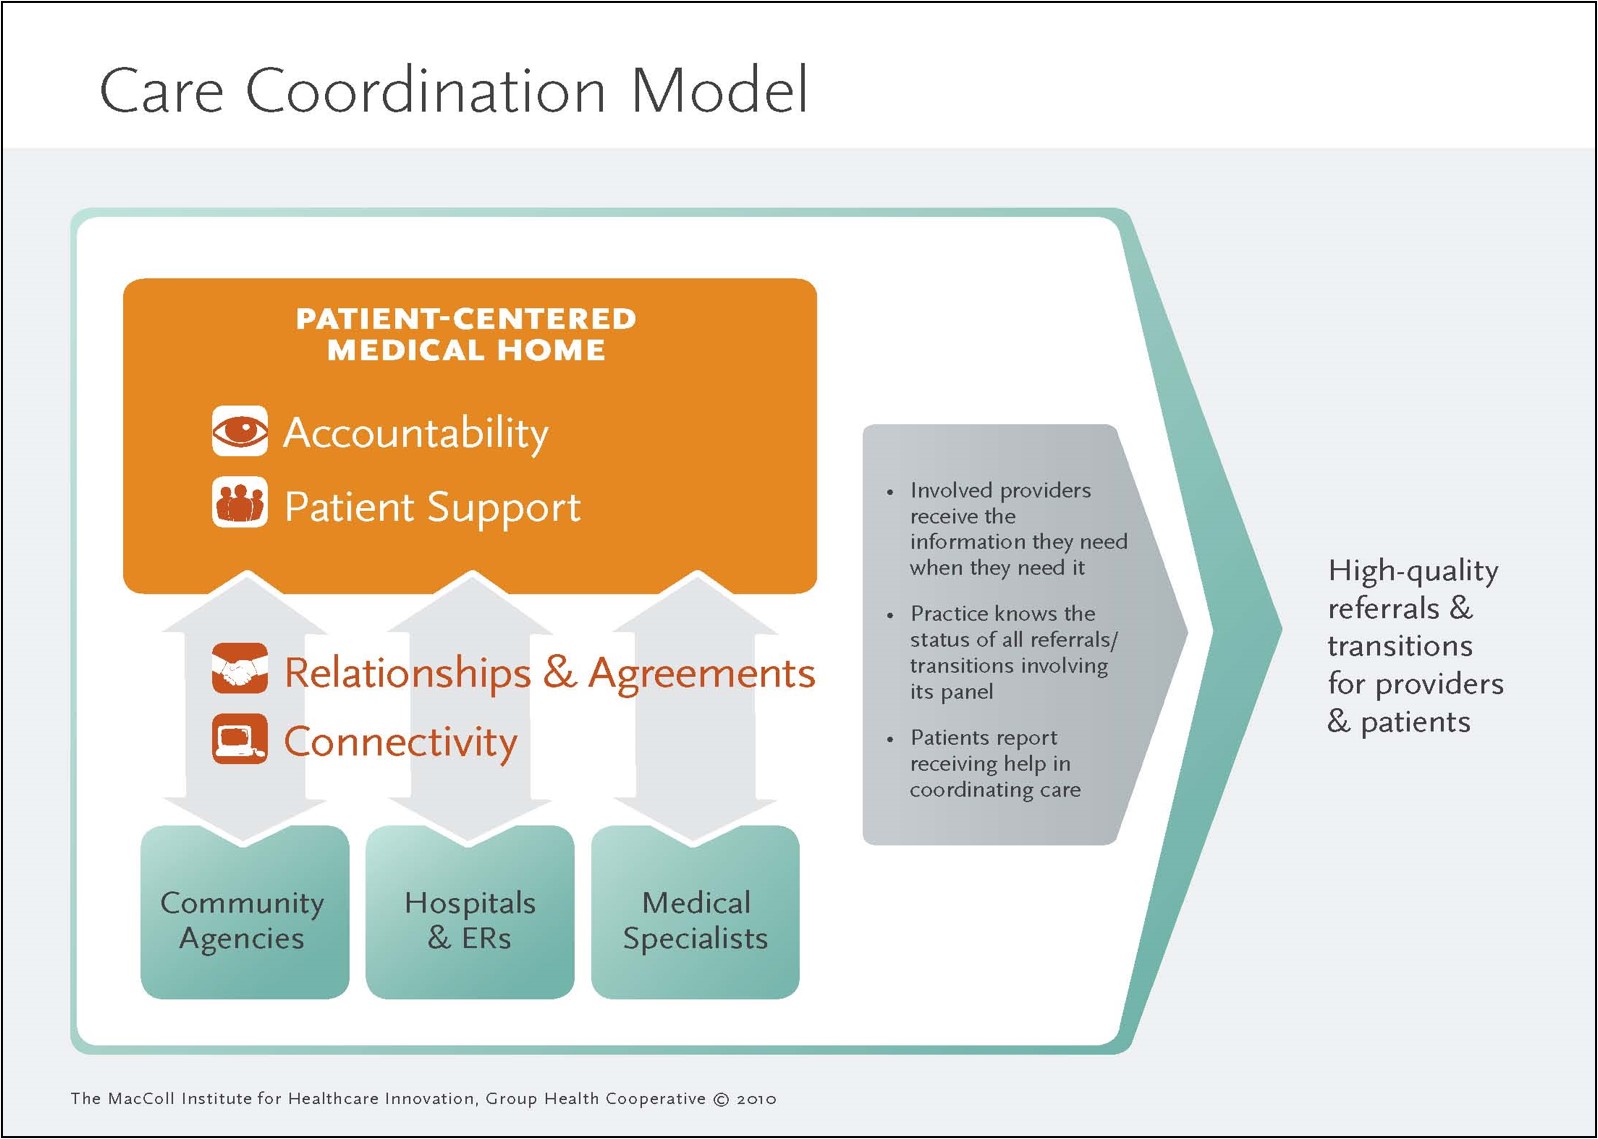 care-coordination-model-image.jpg